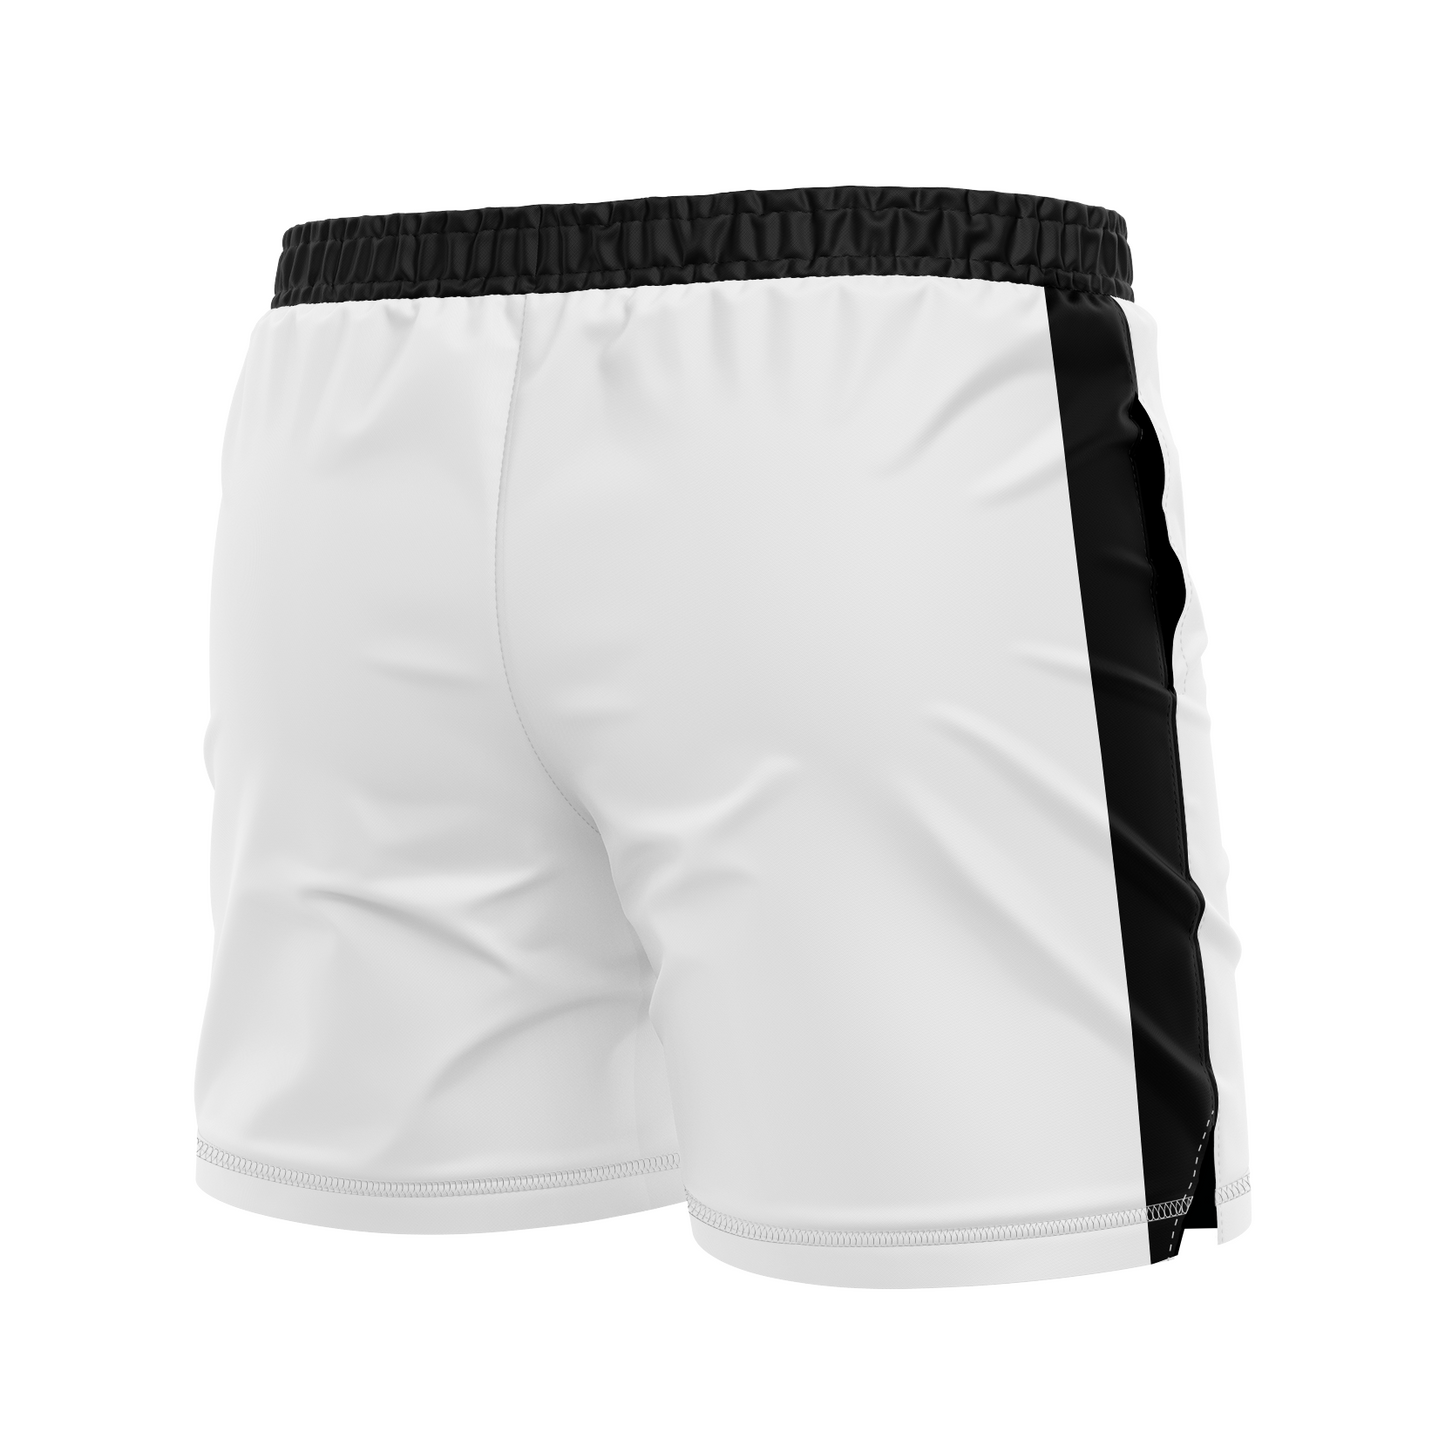 CCFC men's FC shorts Golciaga, white with black, orange, and green